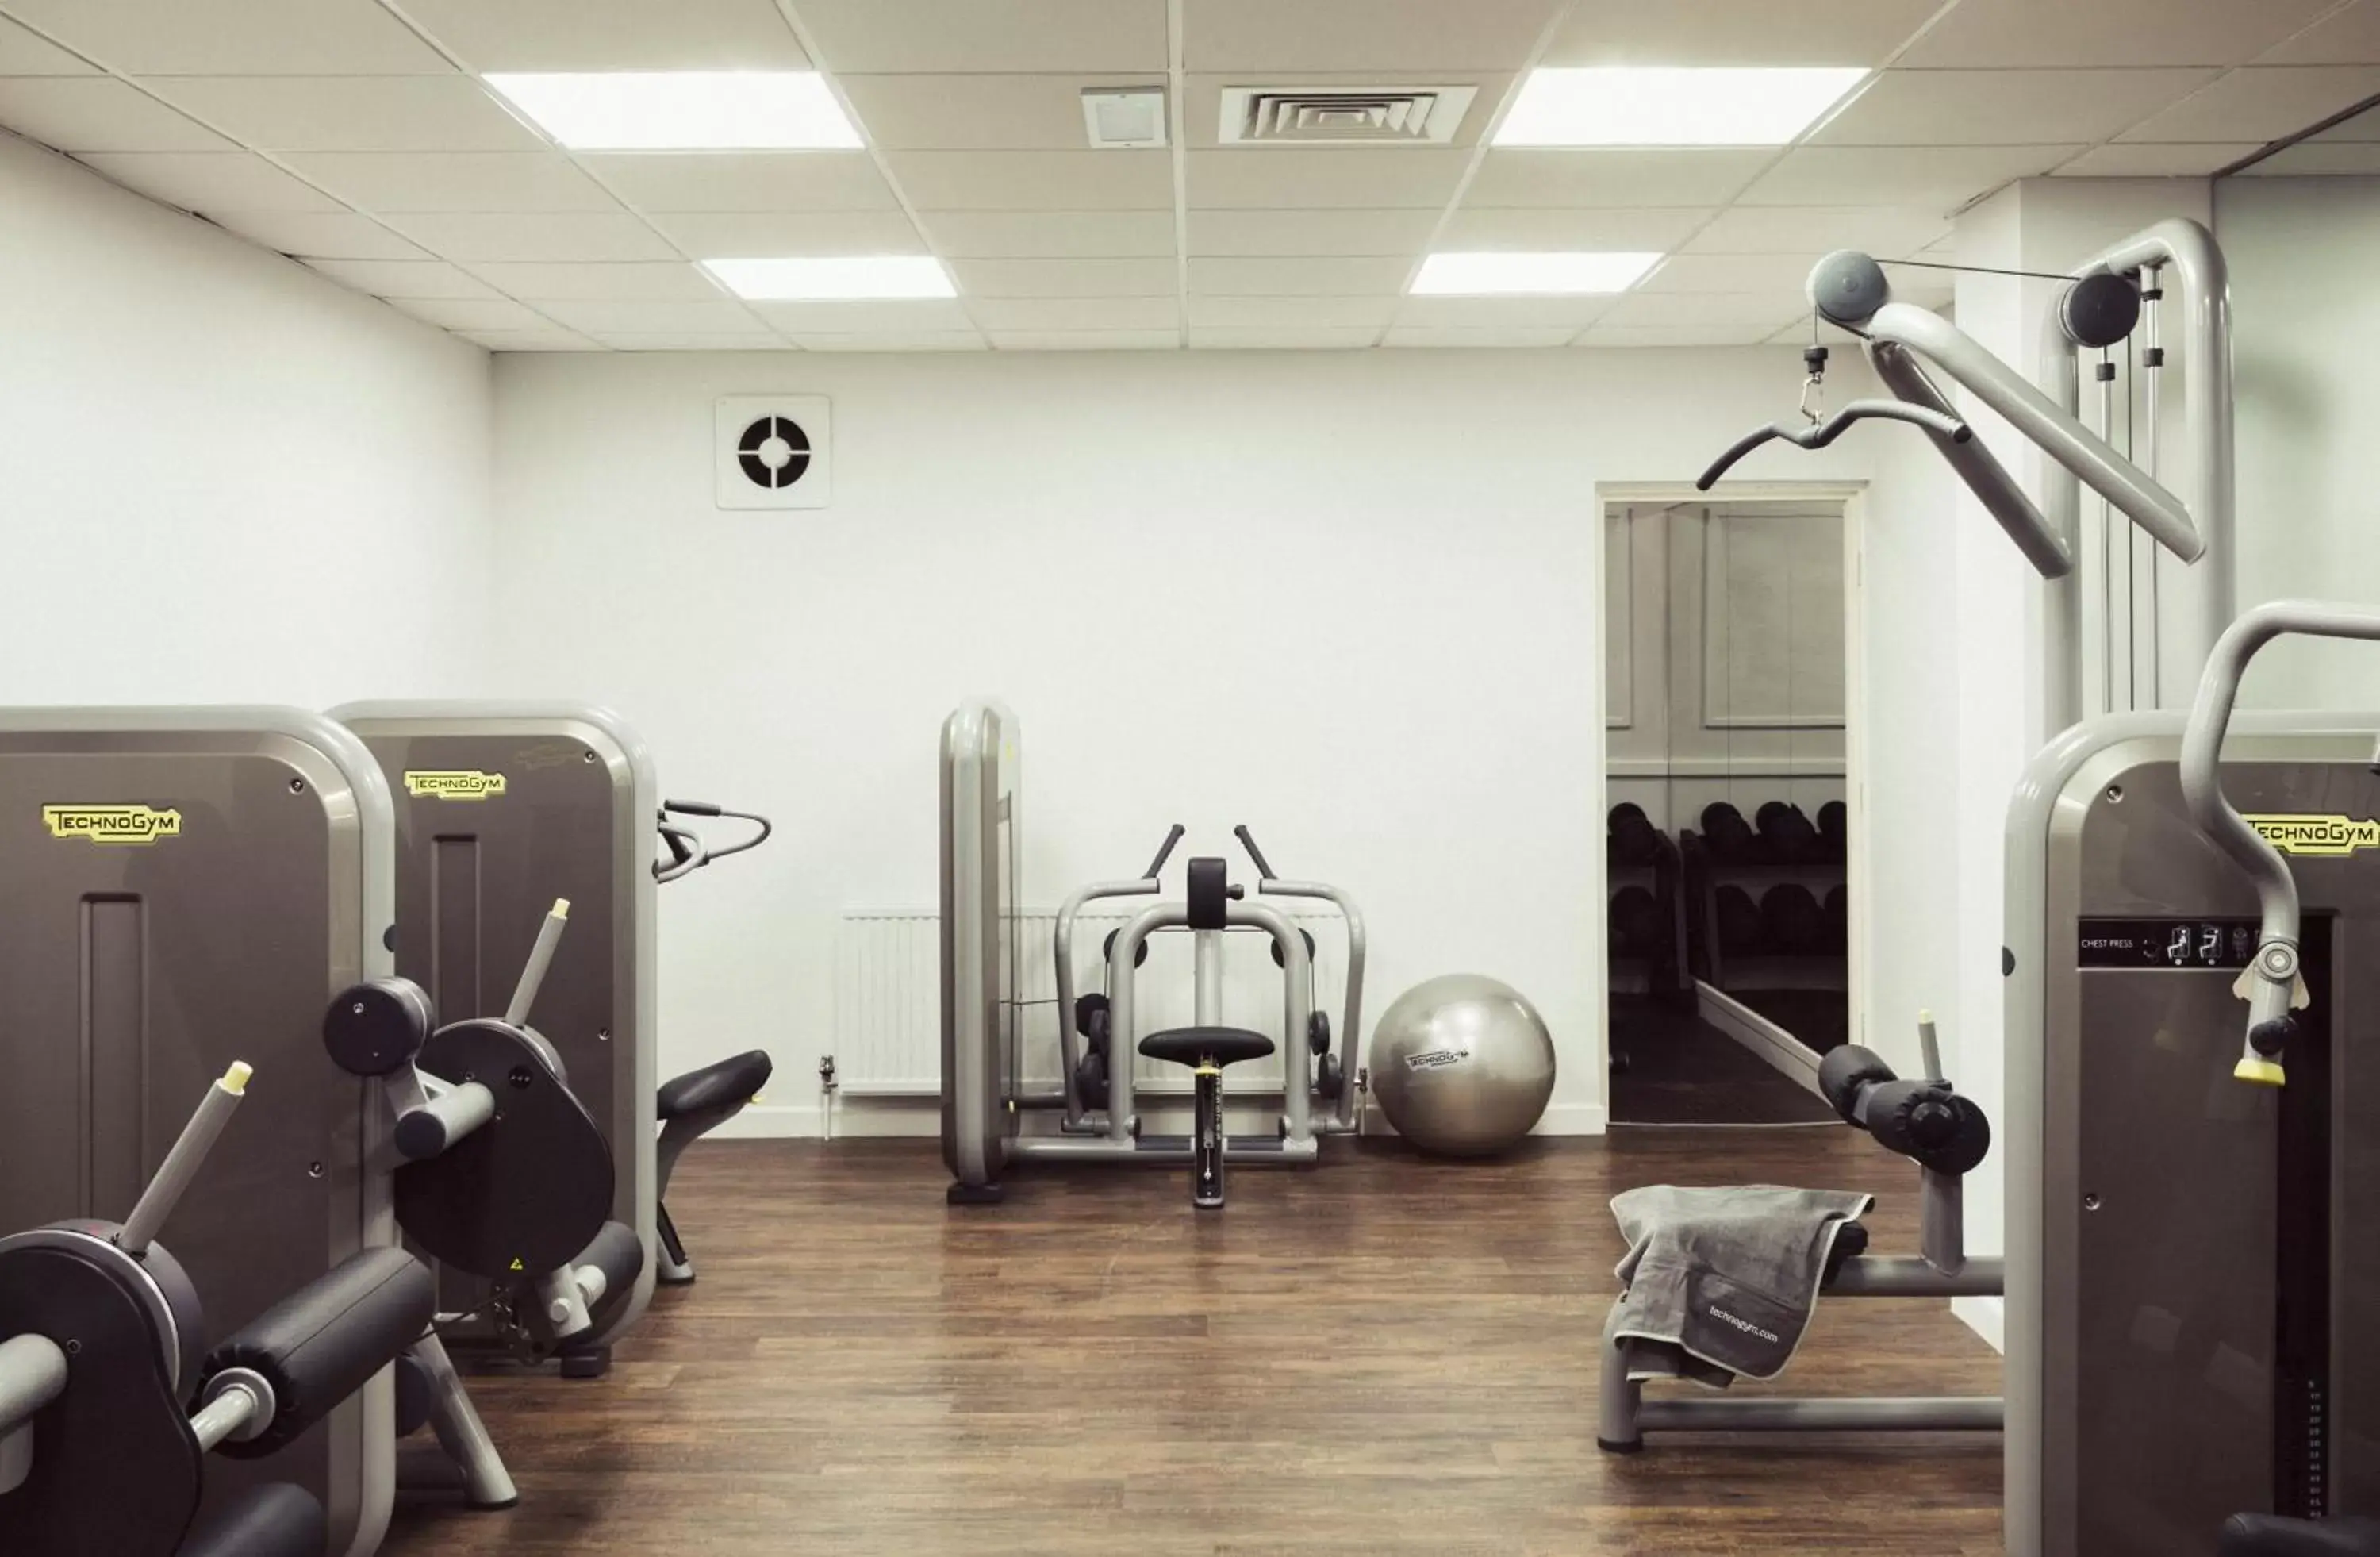 Fitness centre/facilities, Fitness Center/Facilities in Merchants Manor Spa